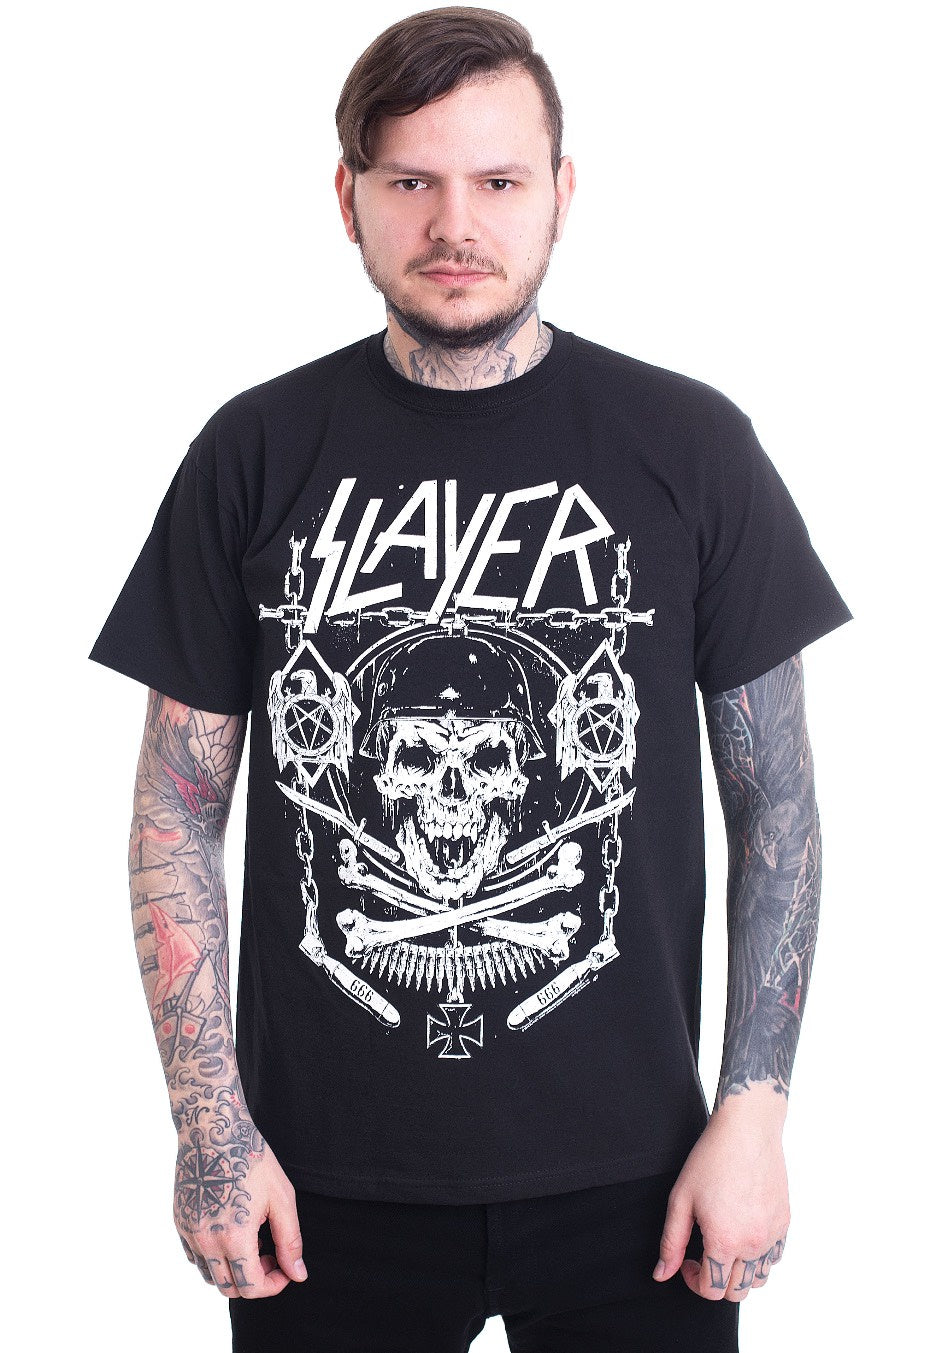 Slayer Skull and Bones Revised T-Shirt